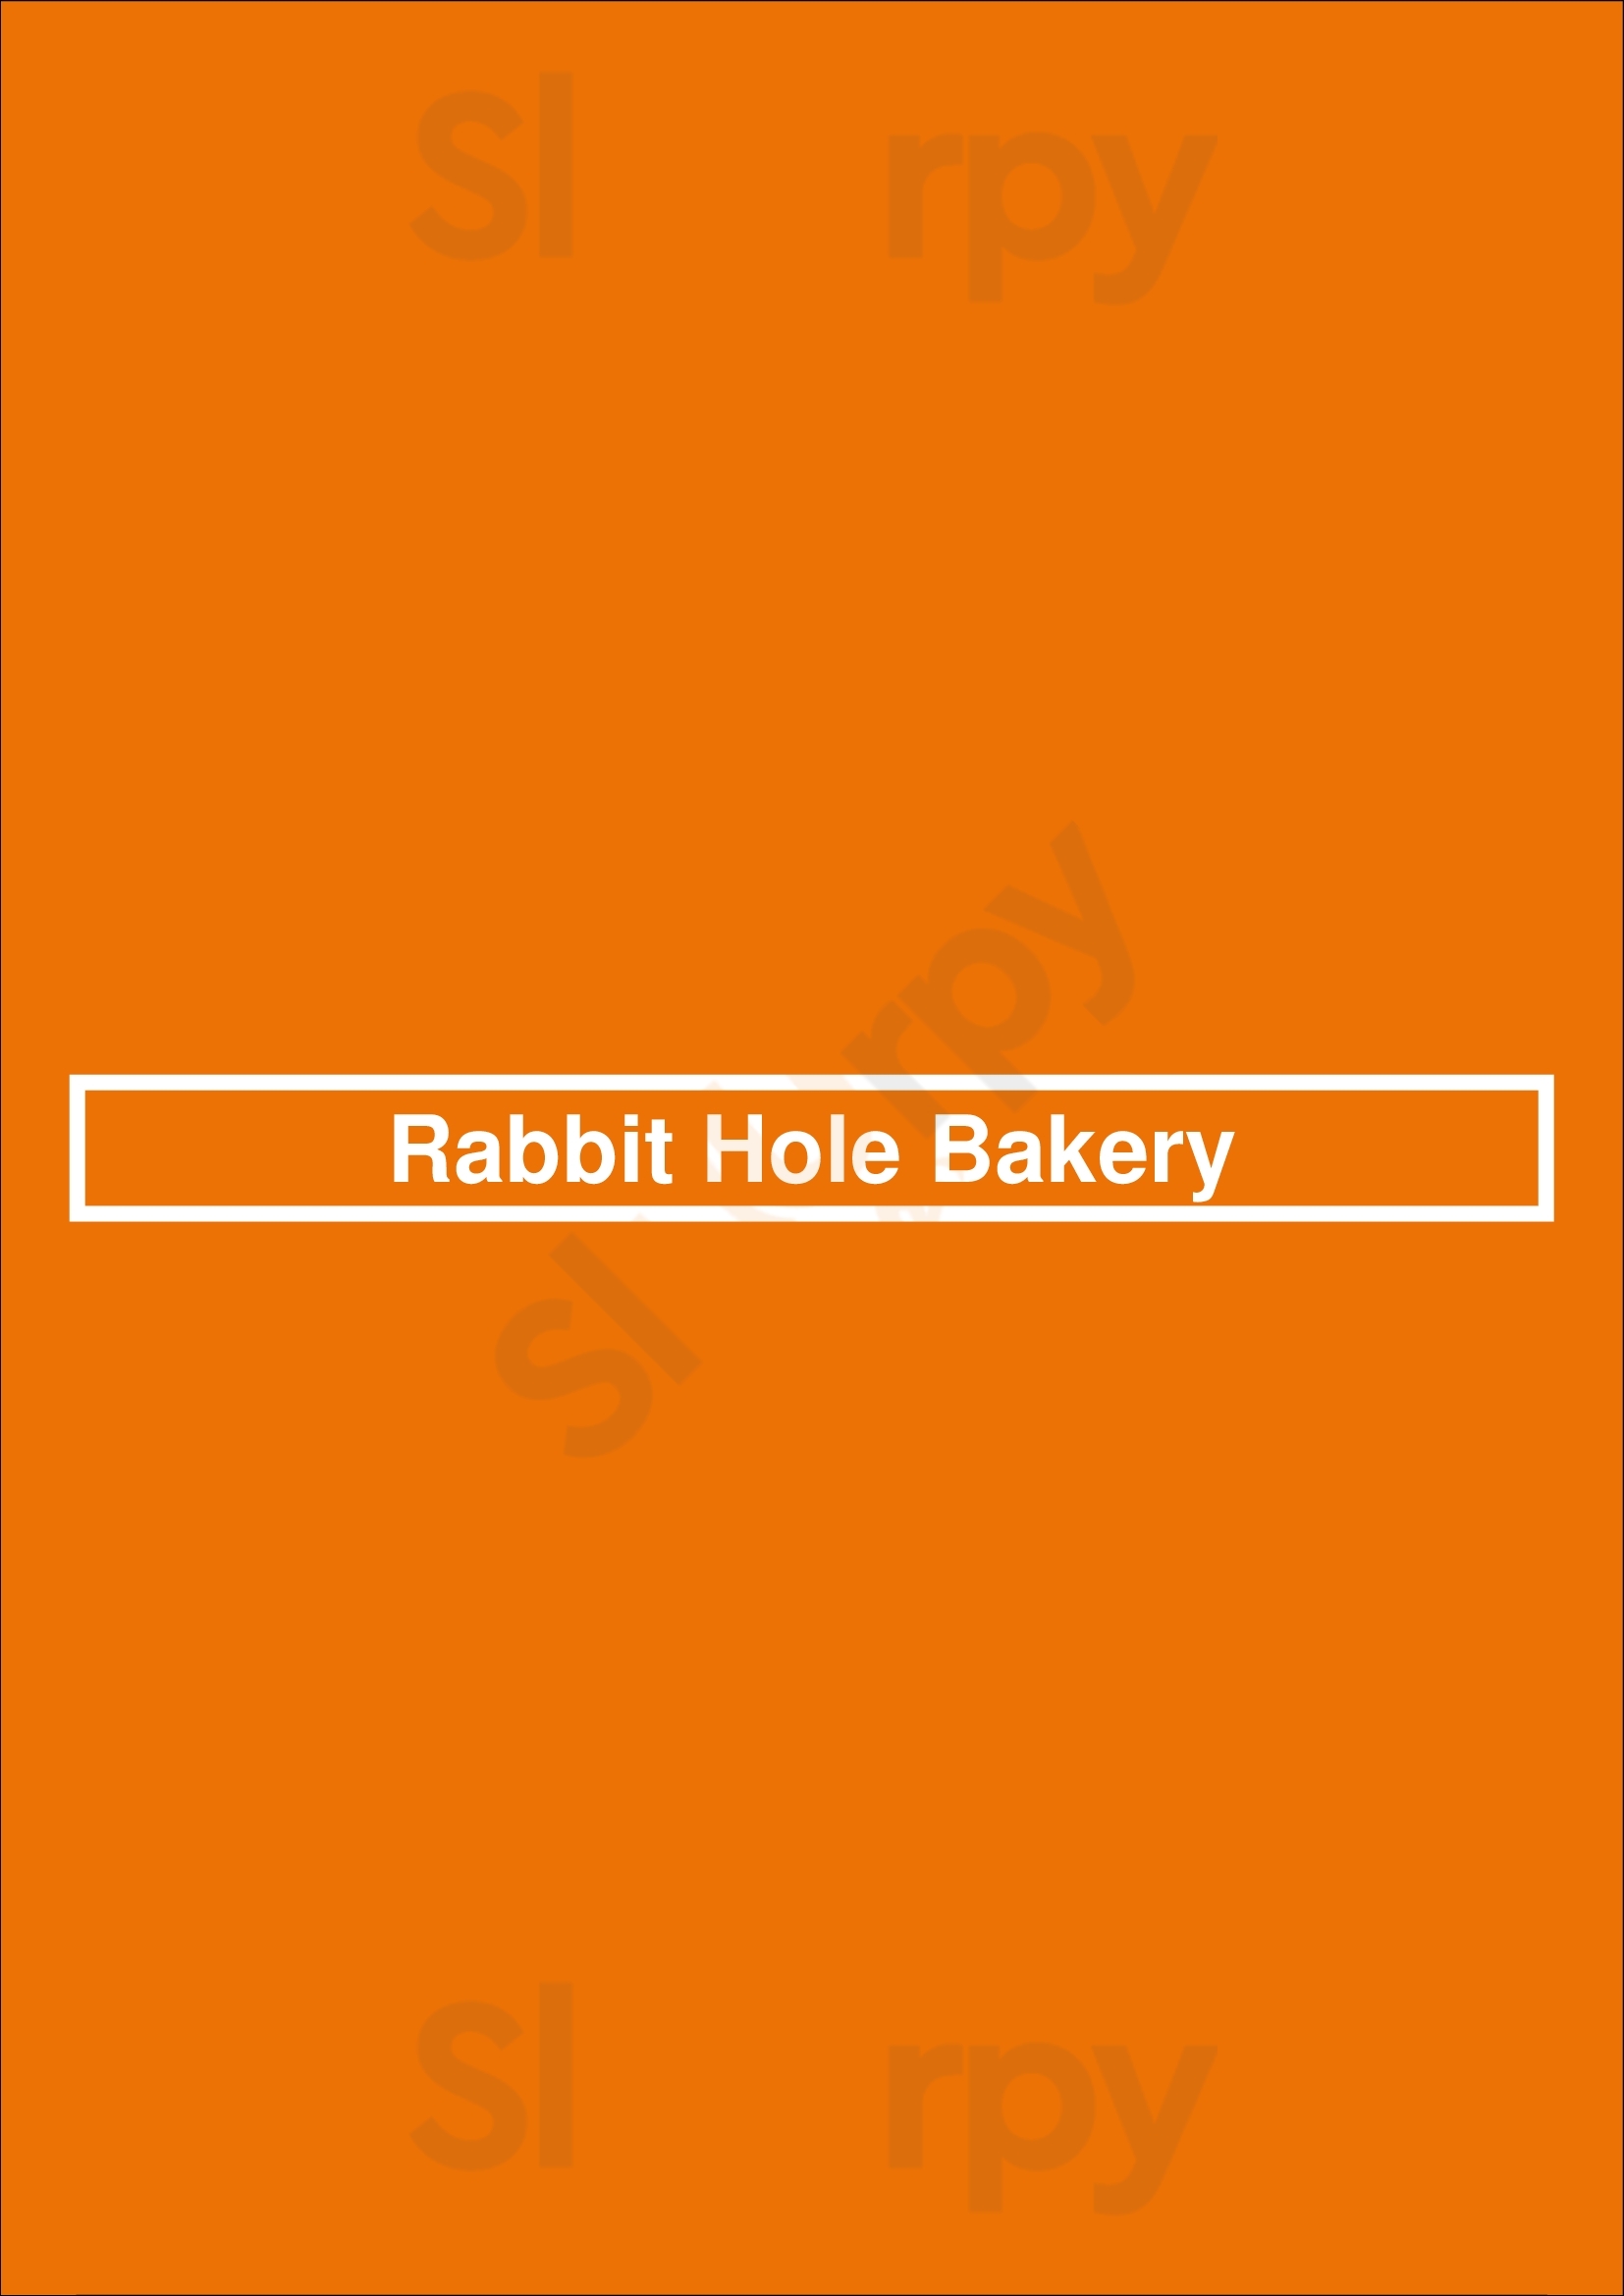 Rabbit Hole Bakery Lincoln Menu - 1